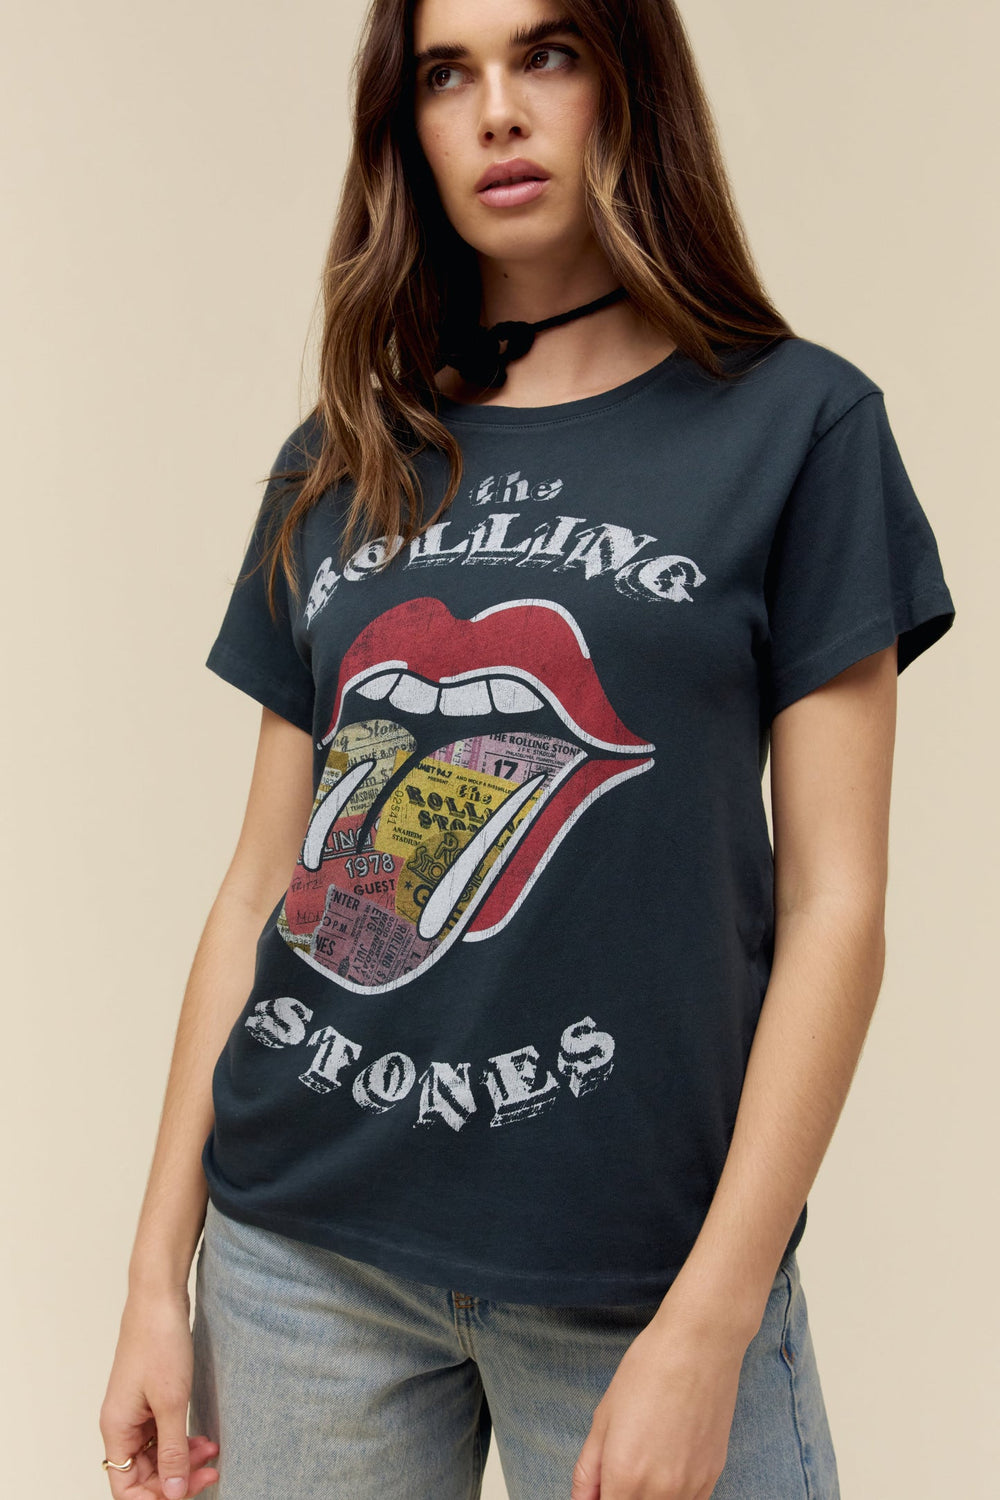 Rolling Stones Market Ticket Shirt Graphic Tour Tongue T Fill – Mint